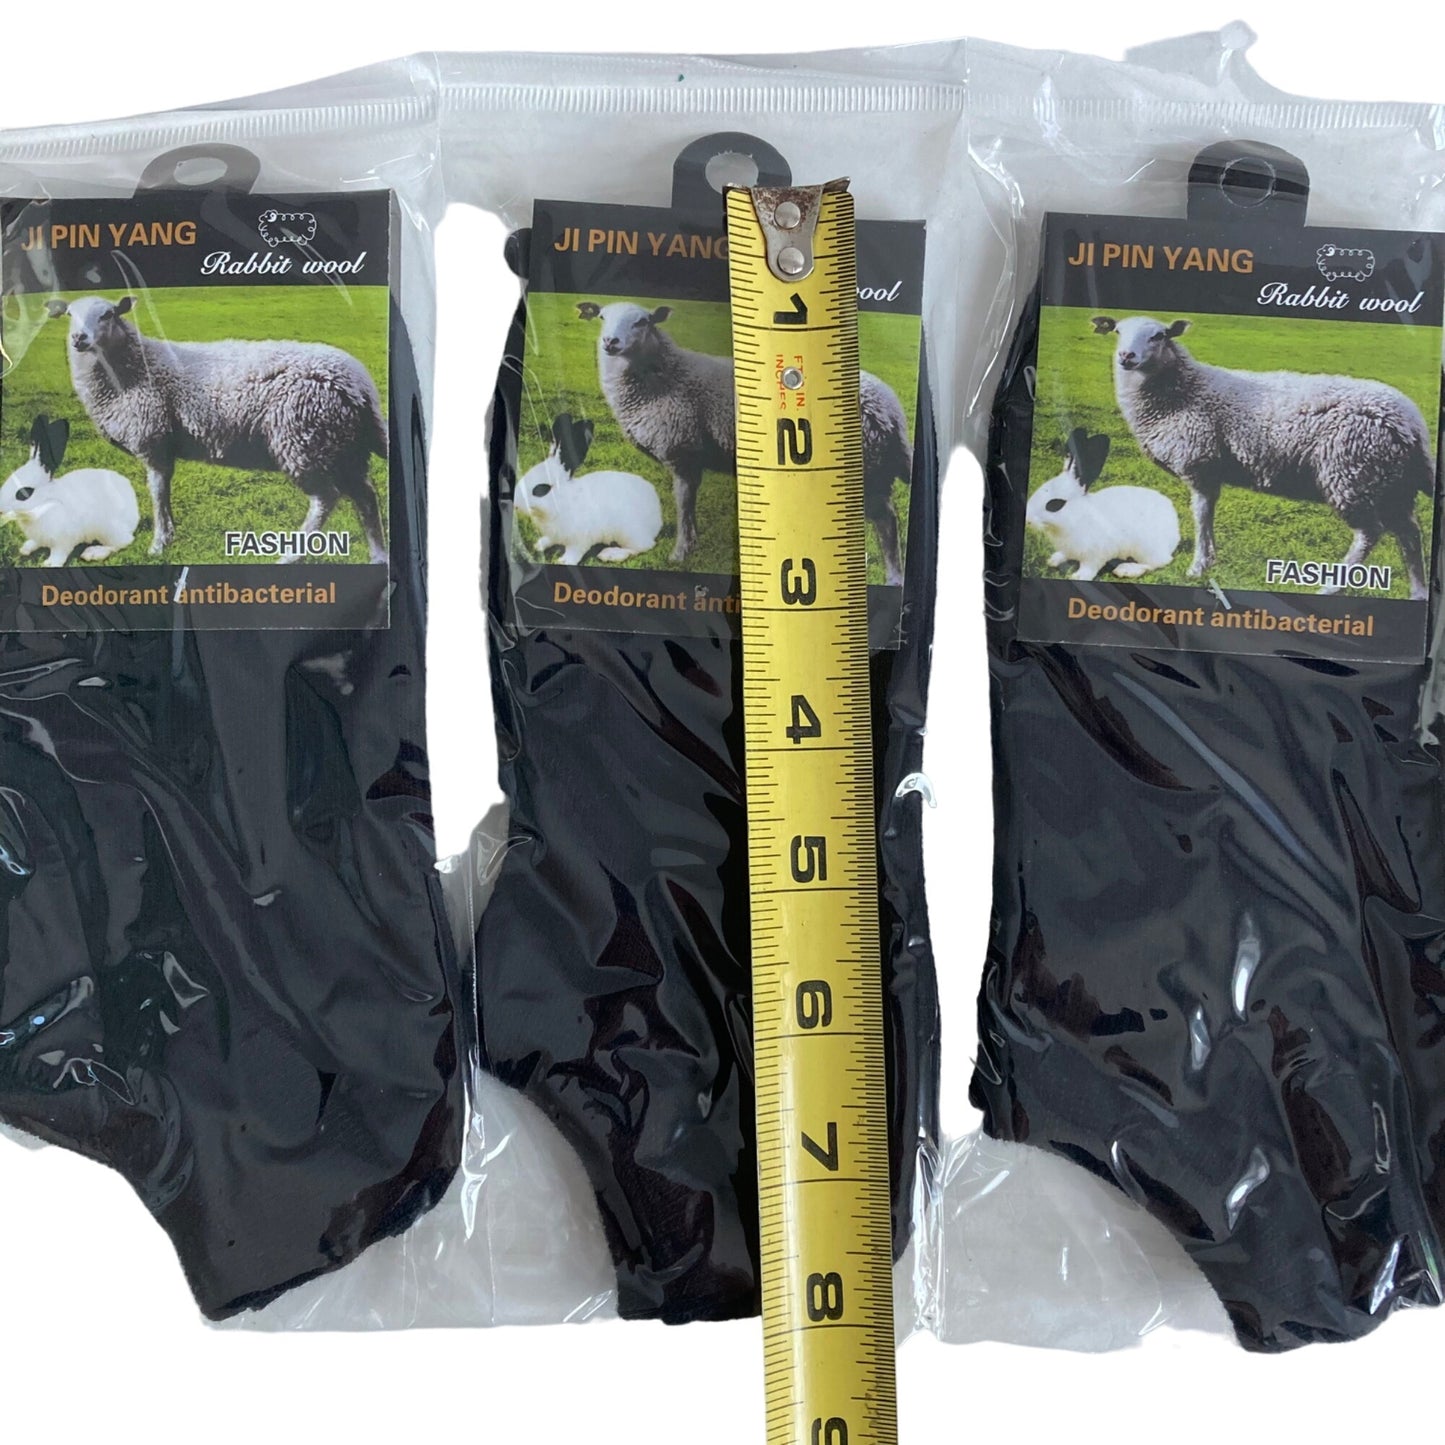 Pack of 6 Pairs Black Ankle Socks RABBIT WOOL Blend NEW